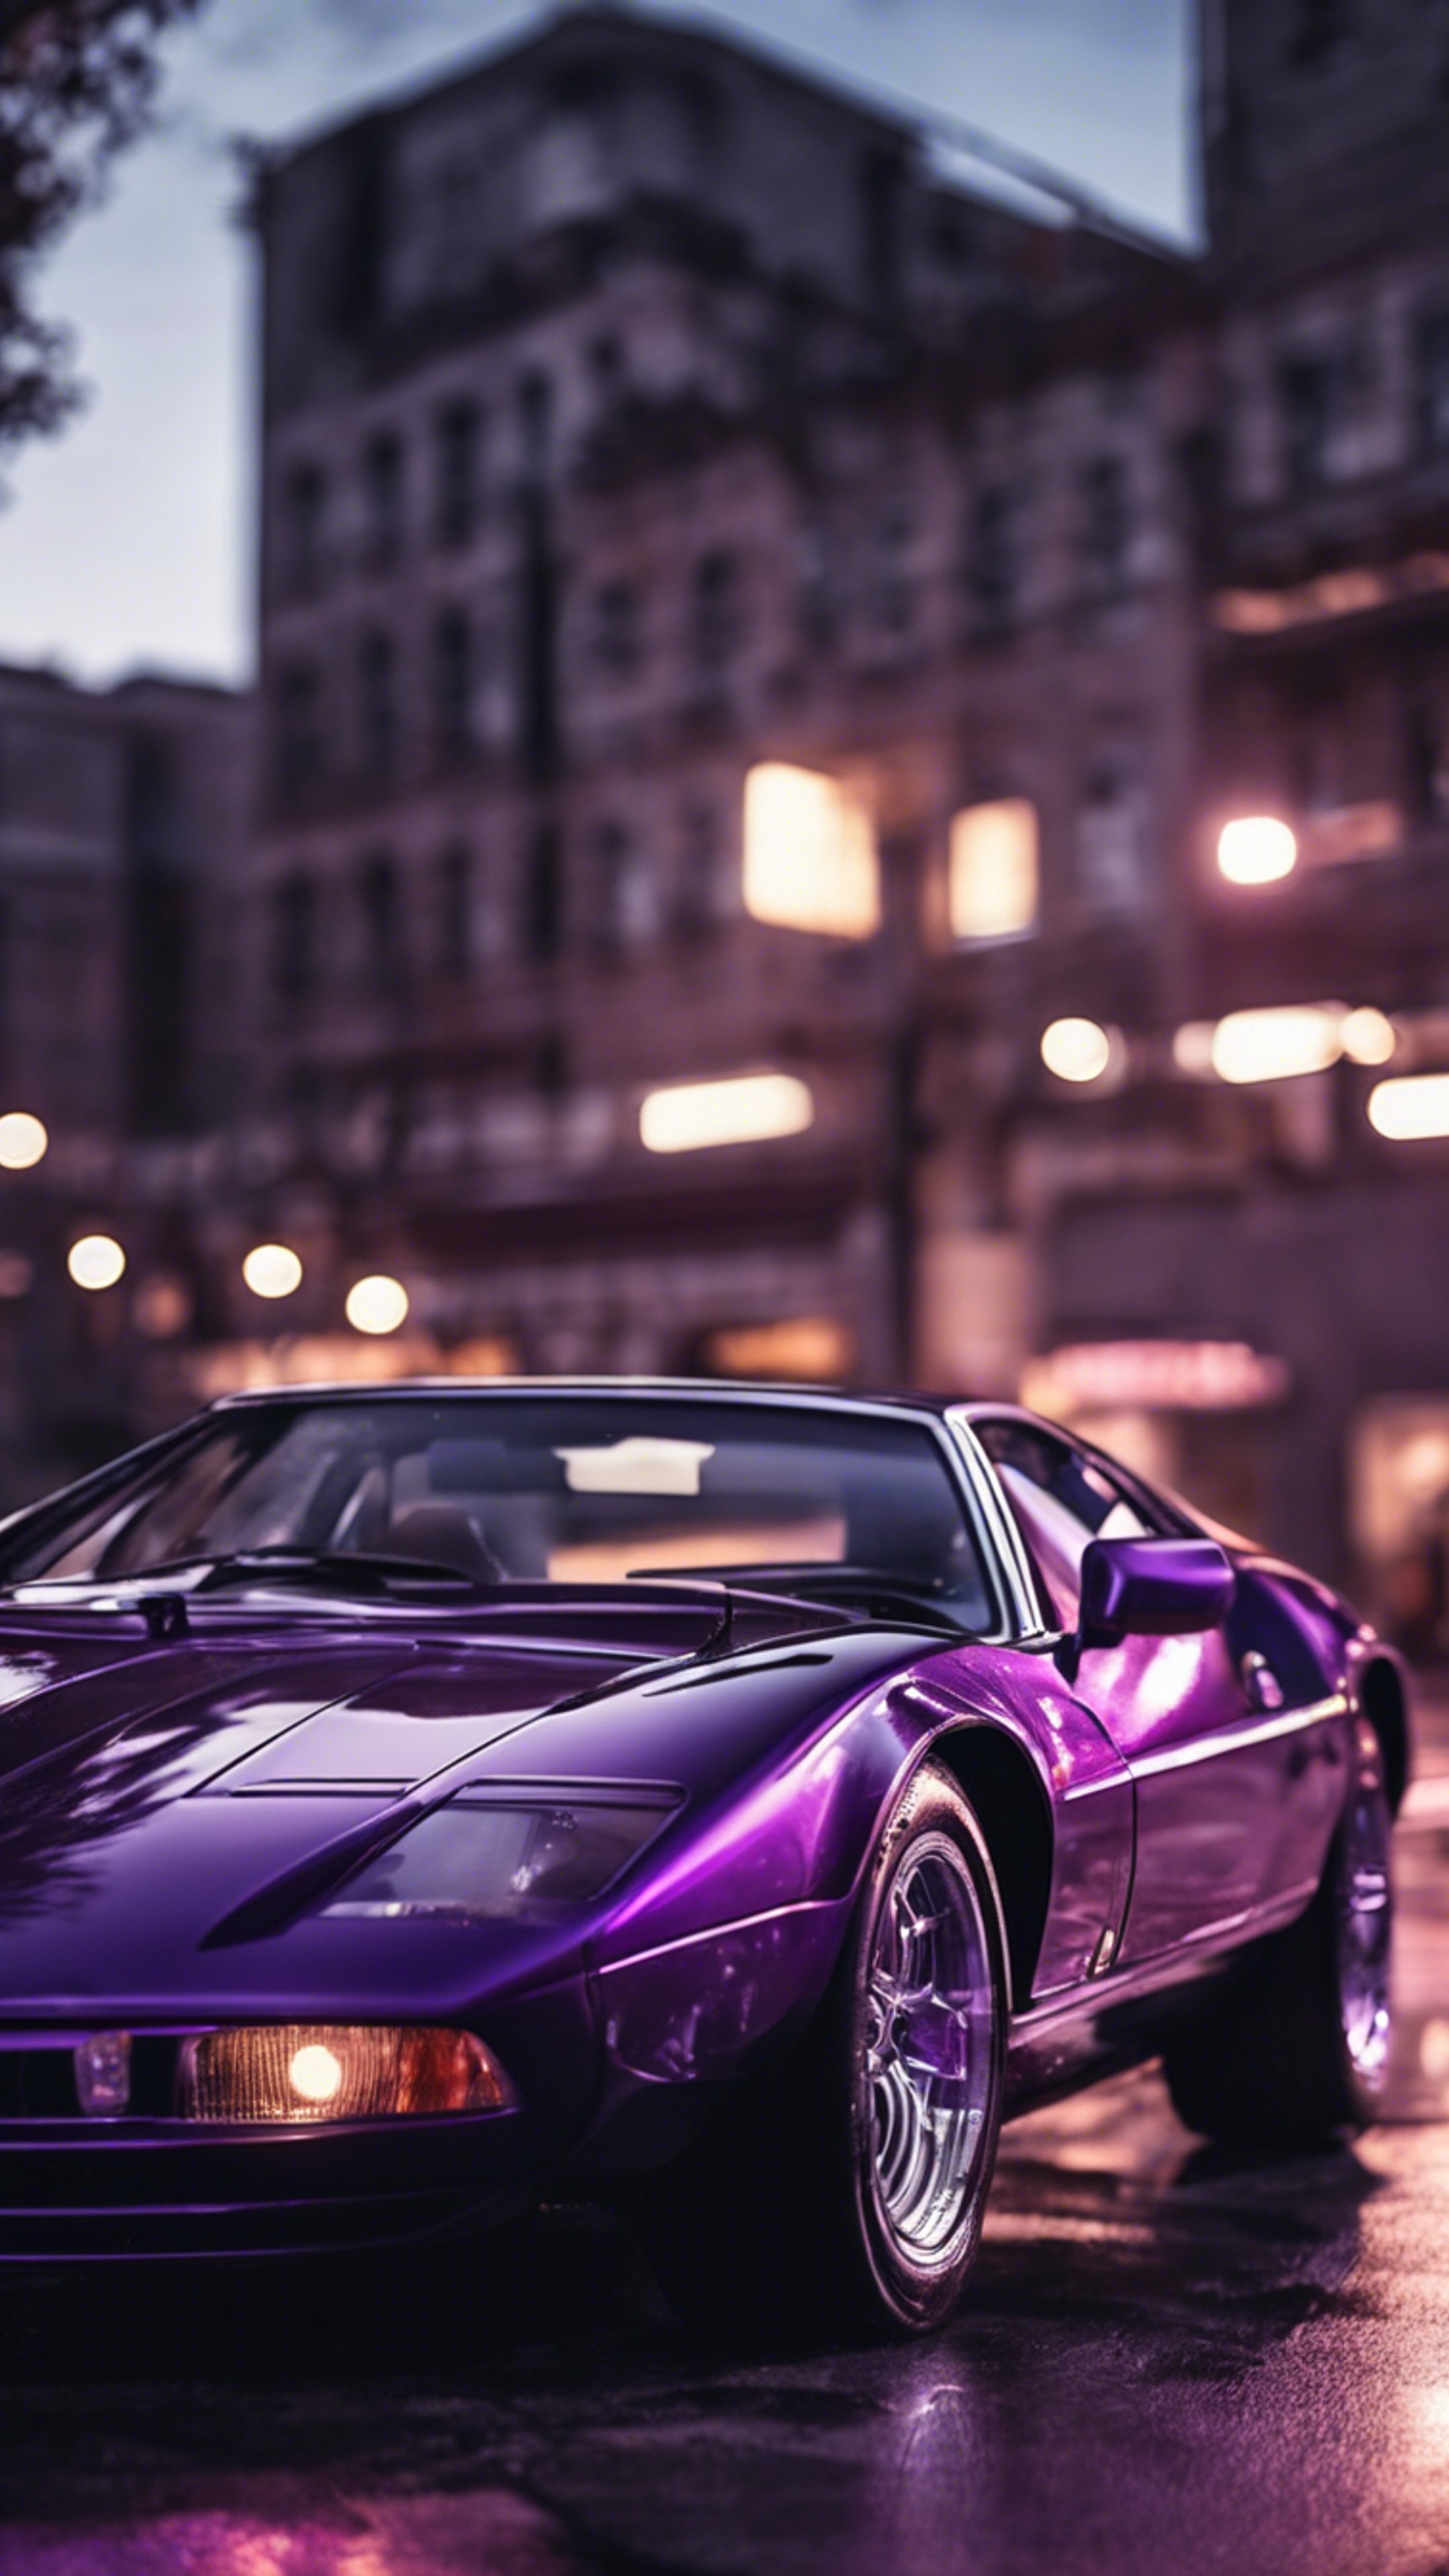 A sleek shiny sportscar, in a cool dark purple hue.壁紙[7dc89e05fe314840a57c]